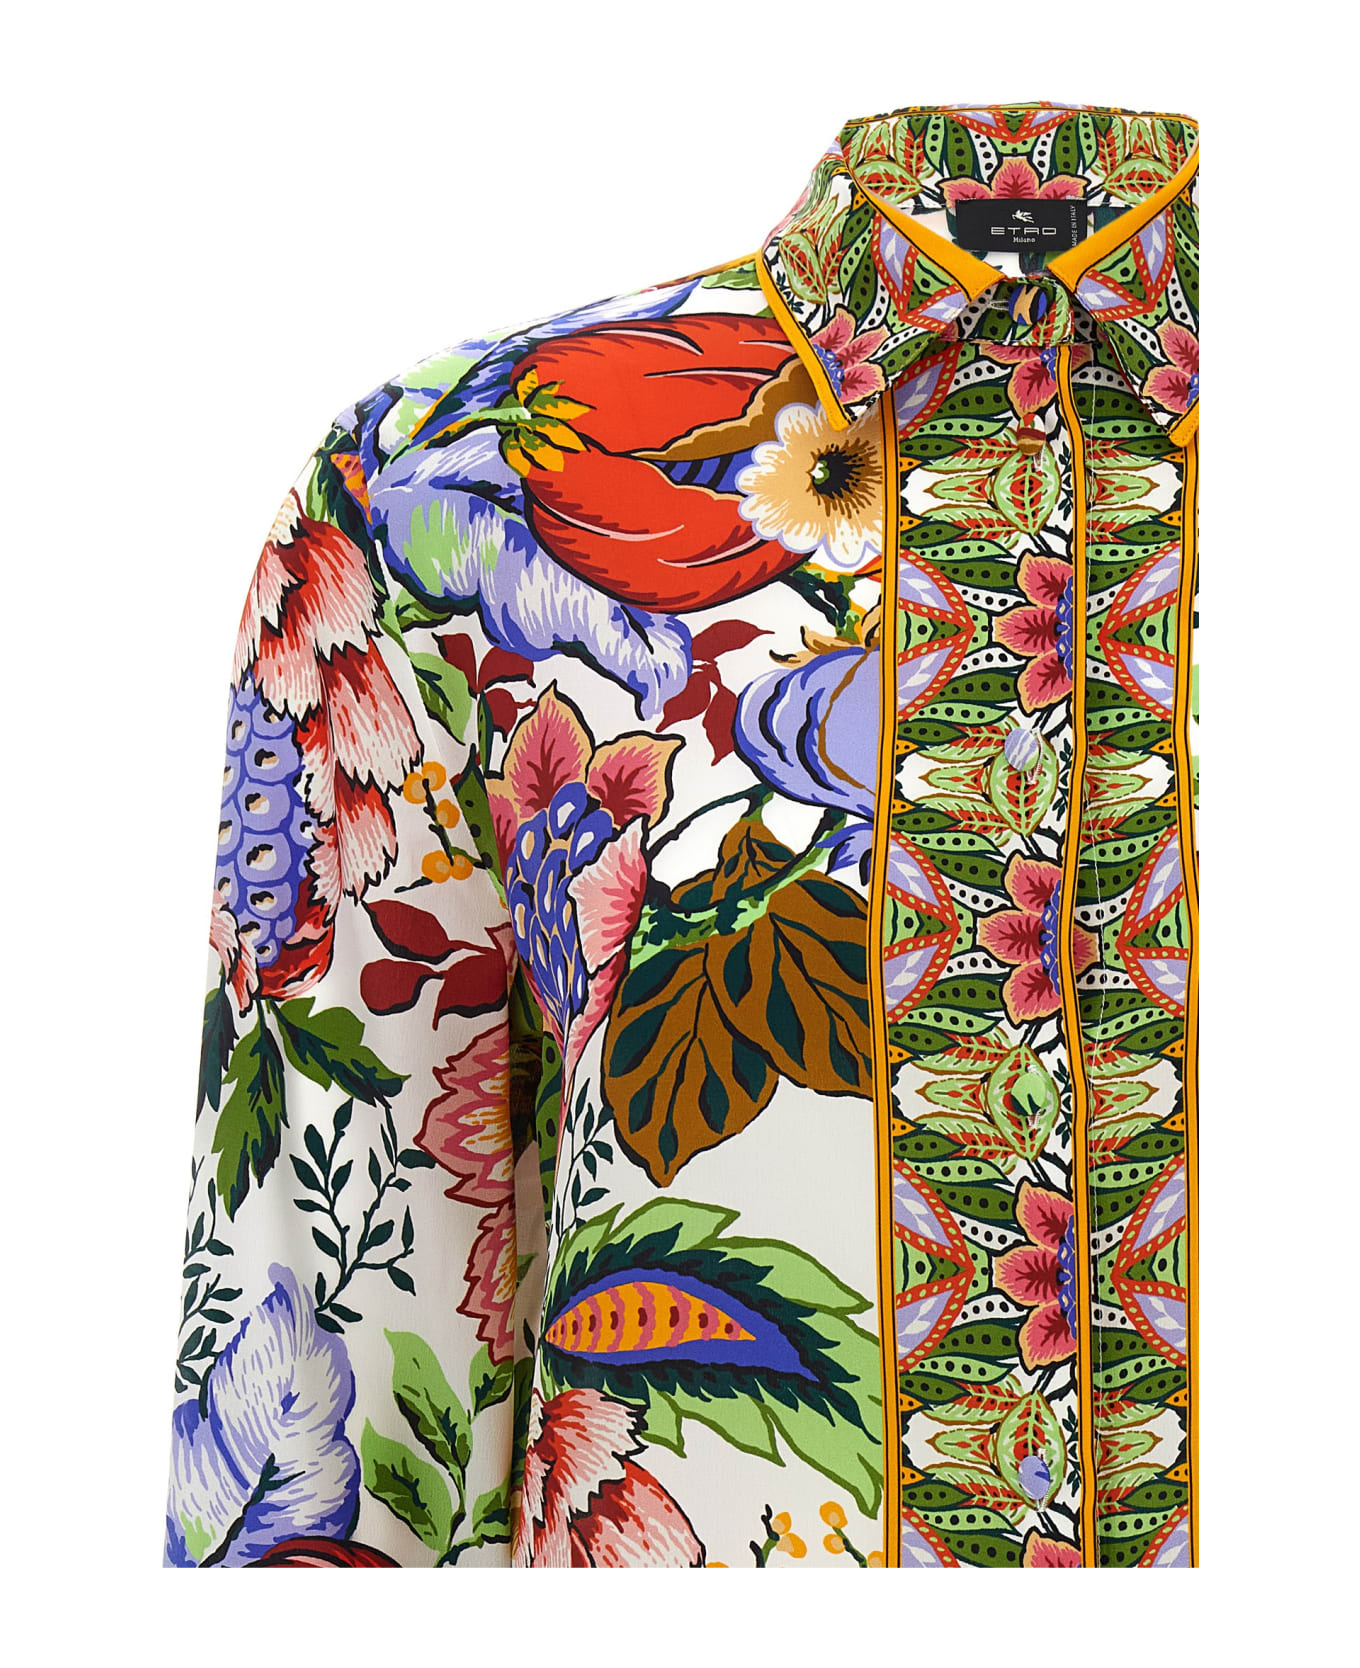 Etro Floral Print Shirt